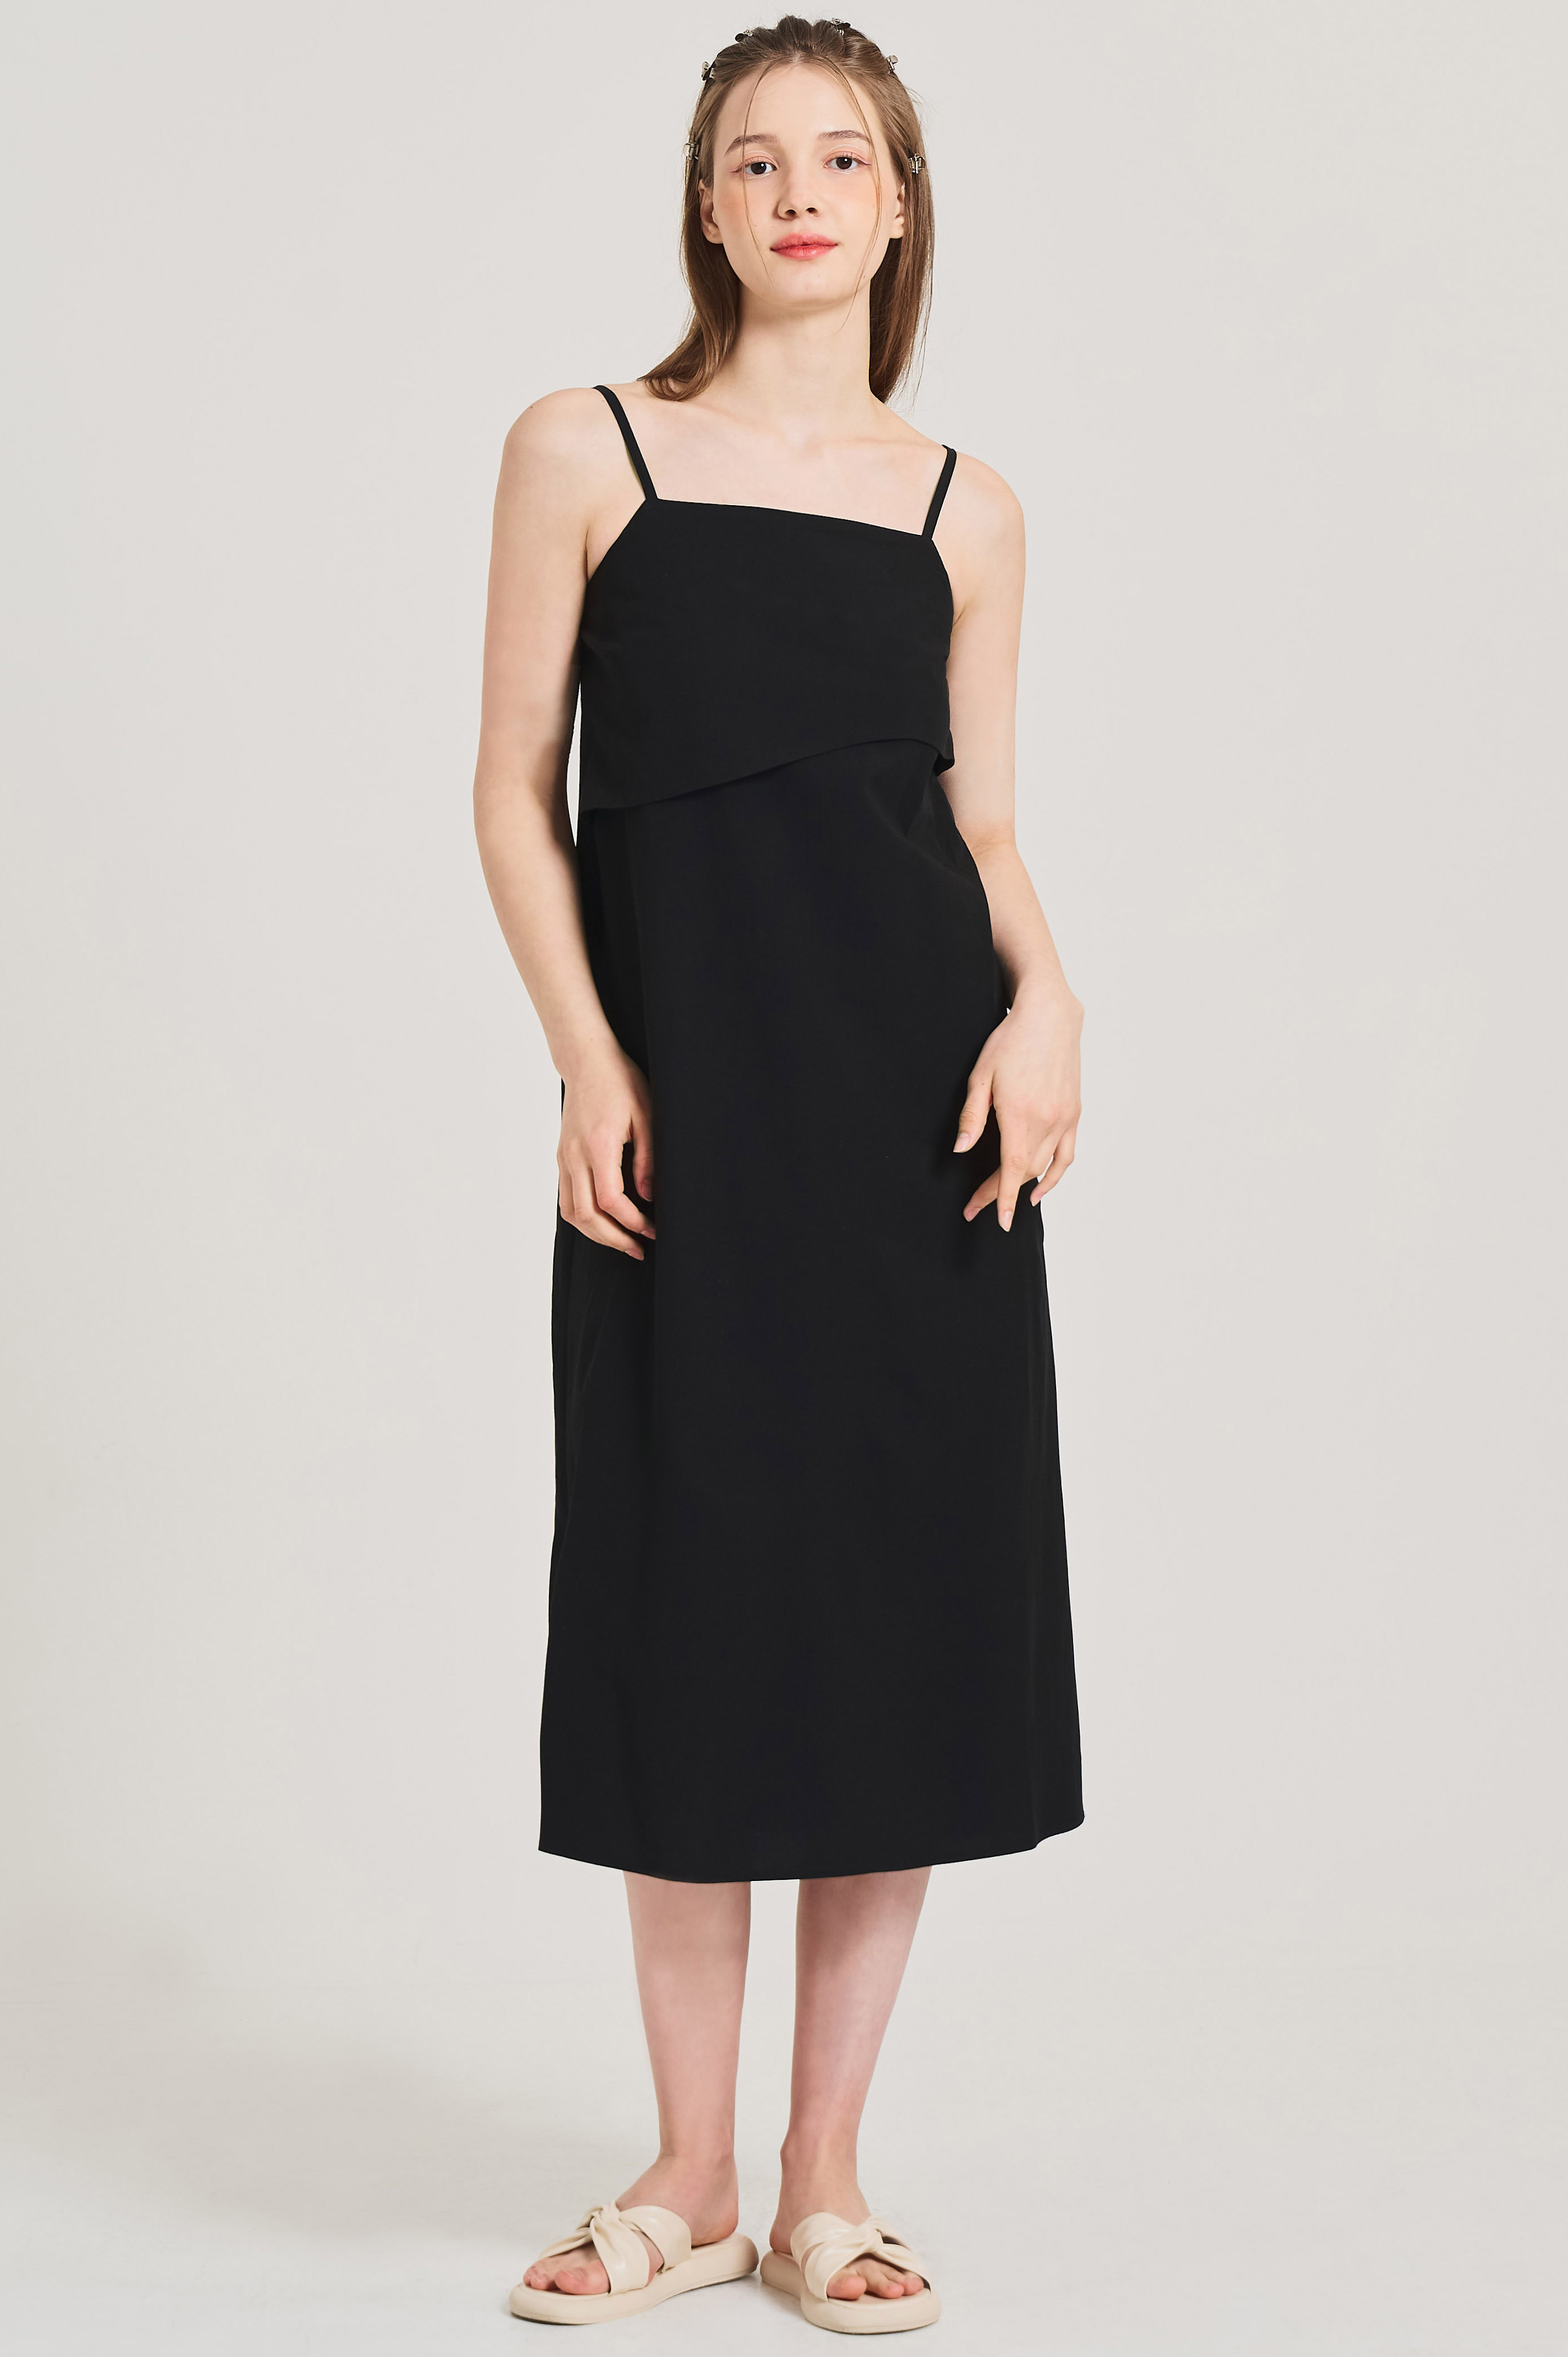 BUCKLE SLEEVELESS DRESS-black, 혜영킴, HYEYEONG KIM designer brand